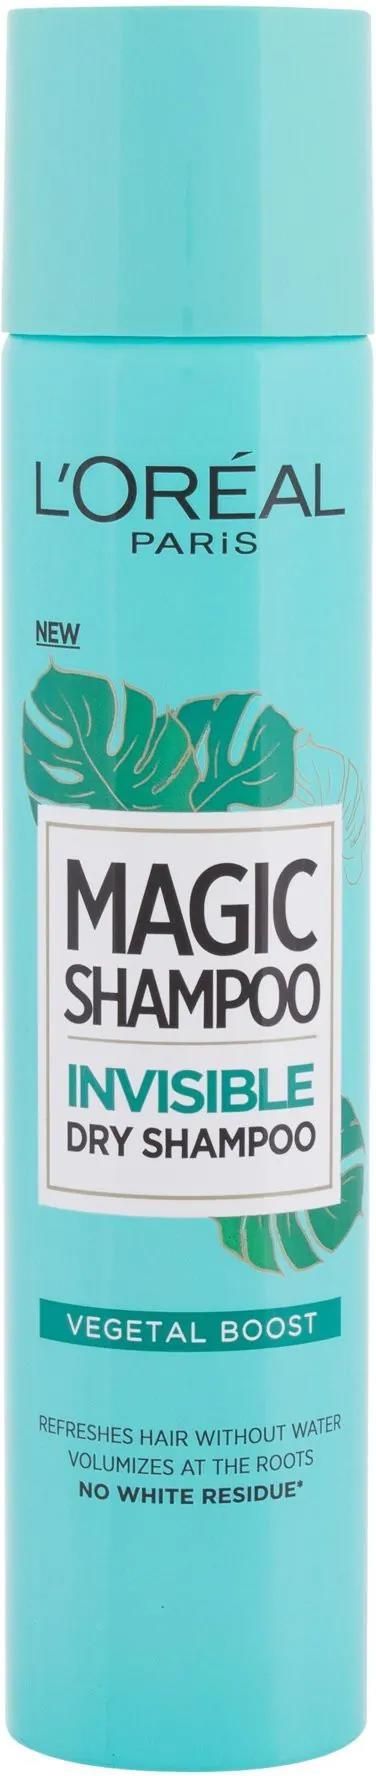 loreal magic shampoo suchy szampon vegetal boost 200ml